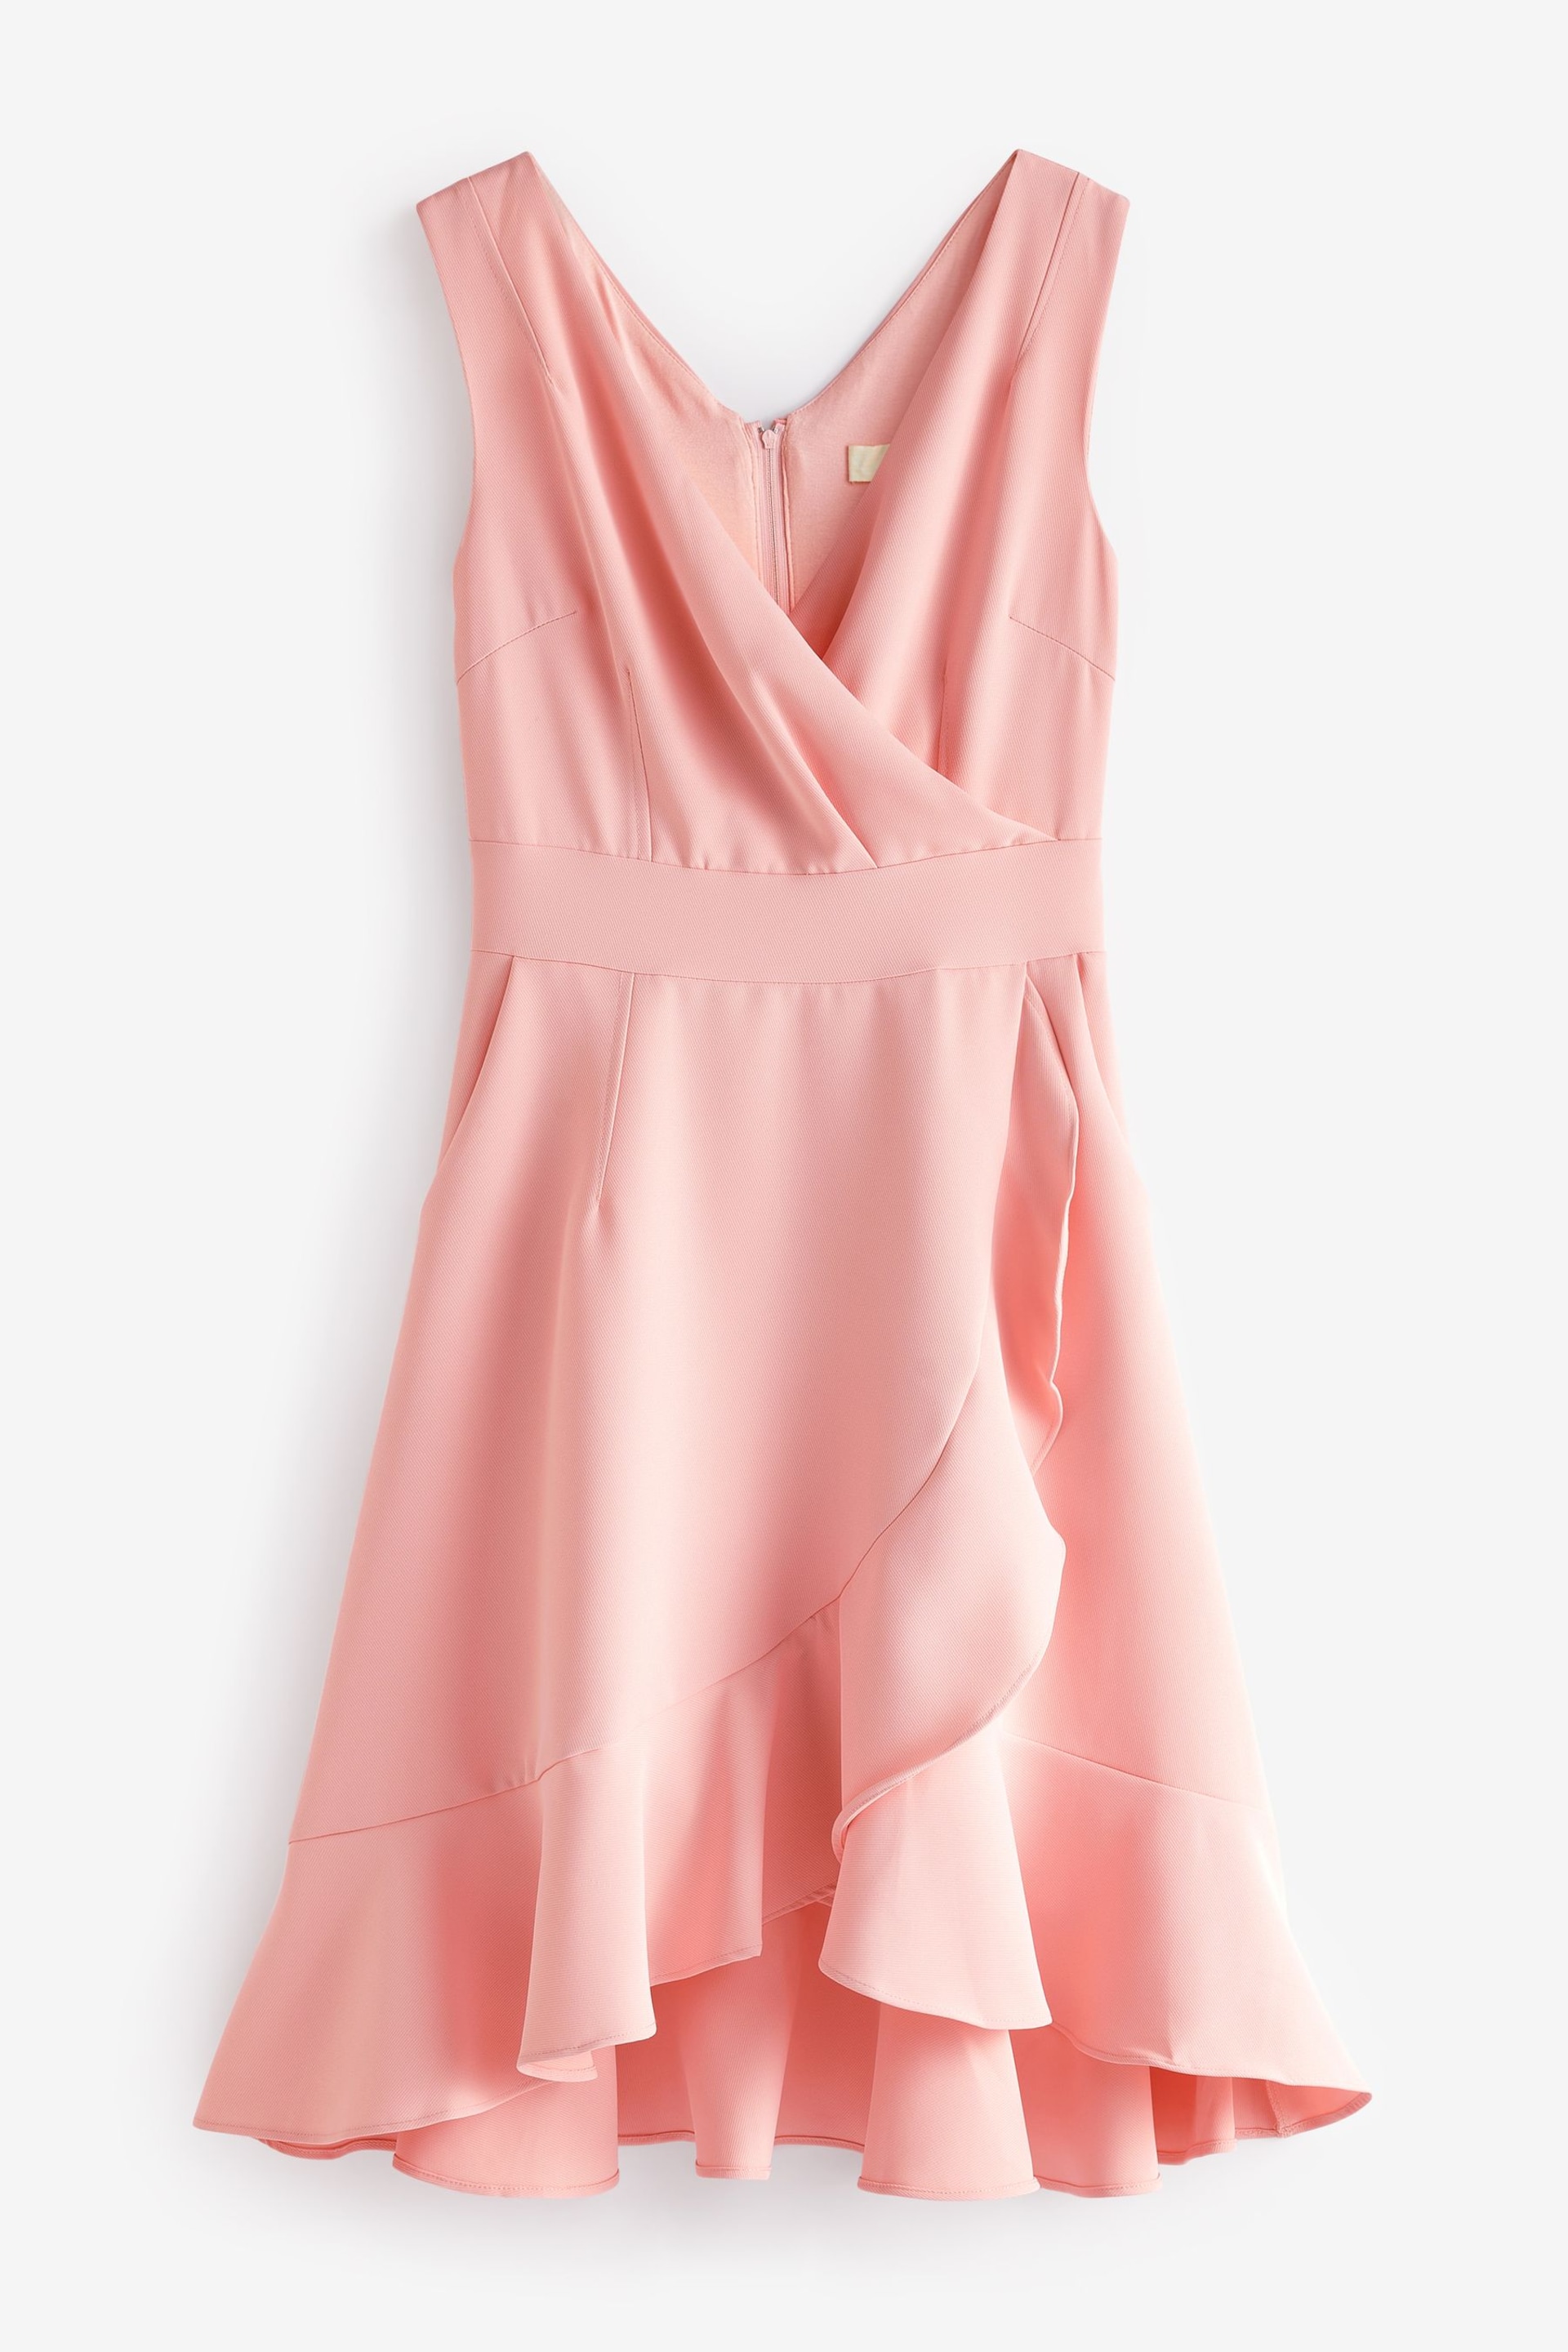 Jolie Moi Pink Wrap Frill Hem Midi Dress - Image 7 of 7